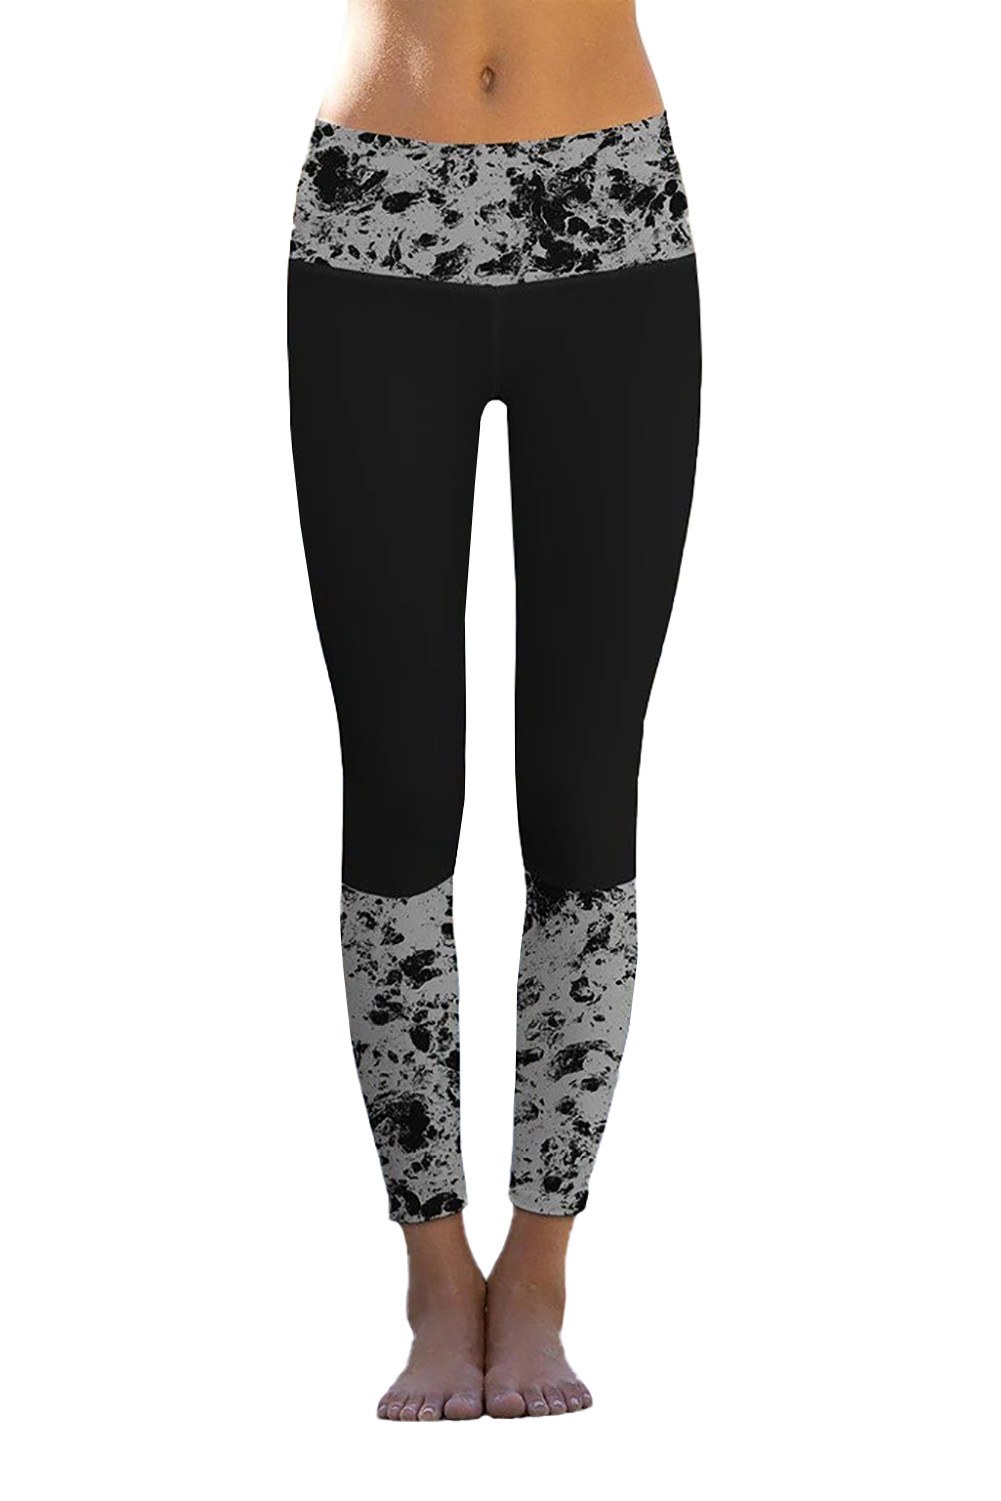 Wholesale Yoga Pants, Cheap Black Mercury Printed Details Leggings Yoga ...